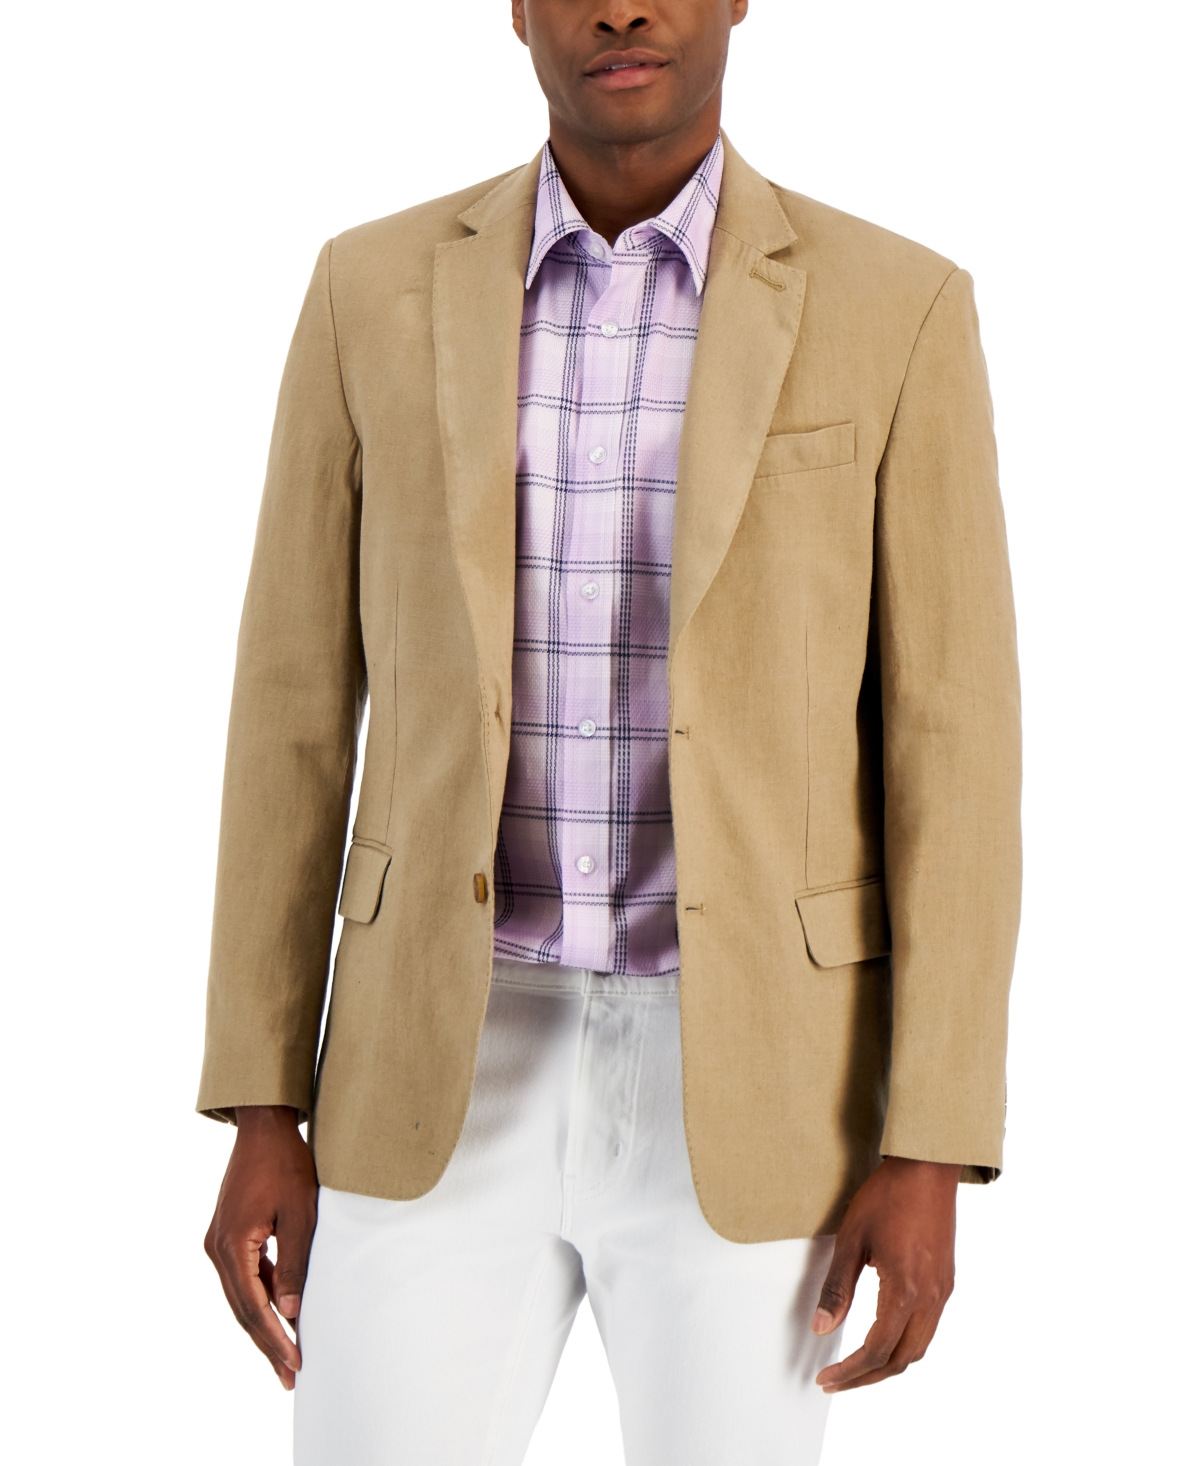 Club Room Men's 100% Linen Blazer Jacket (Grey Slate, White, Natural Khaki) $60 + Free Shipping